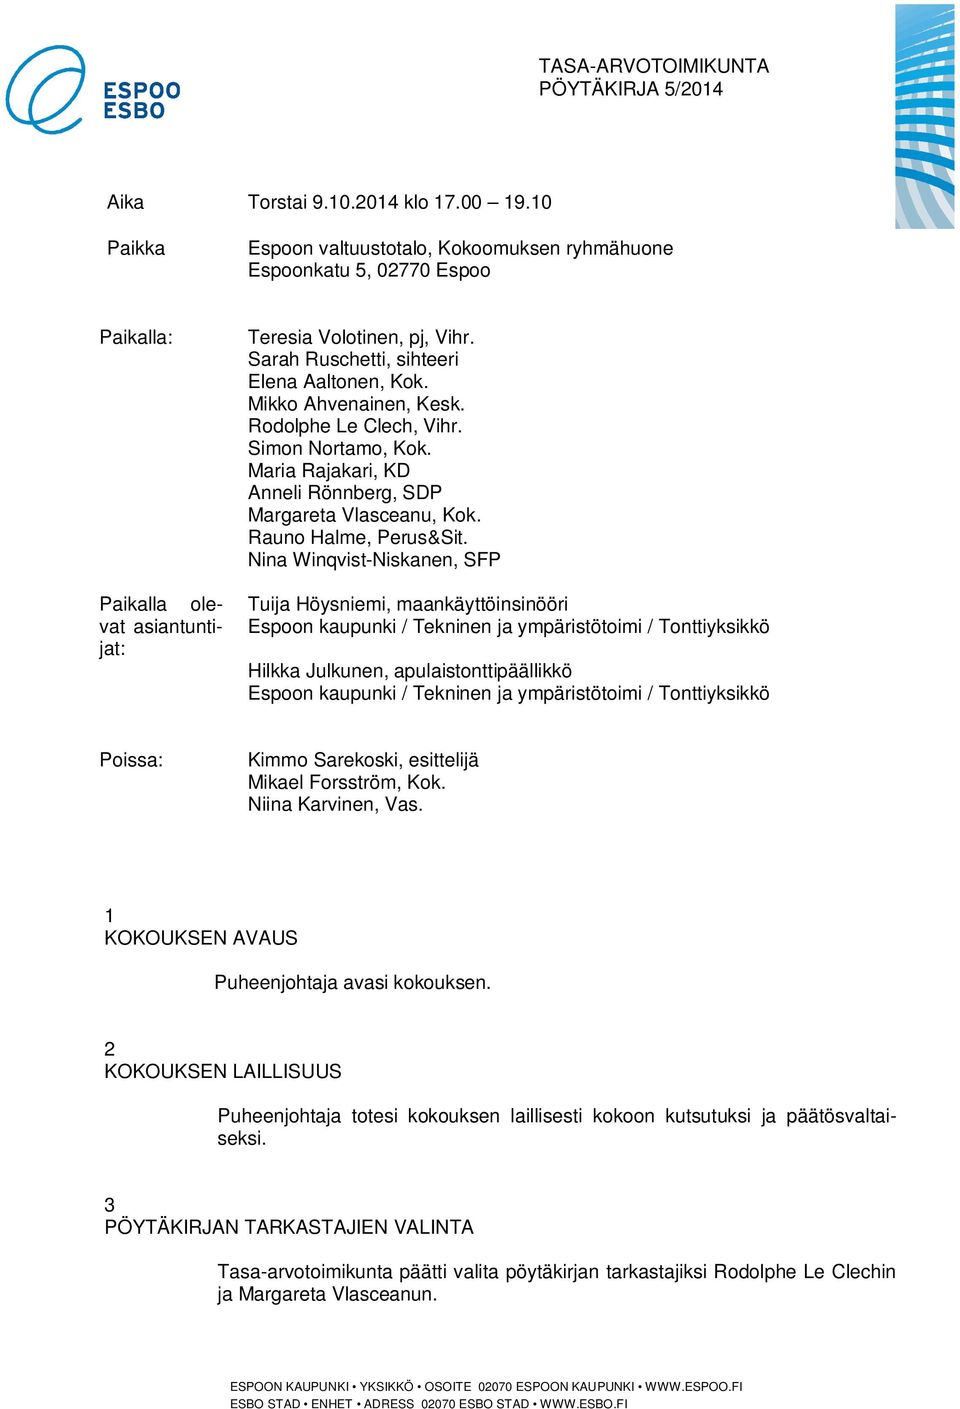 Mikko Ahvenainen, Kesk. Rodolphe Le Clech, Vihr. Simon Nortamo, Kok. Maria Rajakari, KD Anneli Rönnberg, SDP Margareta Vlasceanu, Kok. Rauno Halme, Perus&Sit.